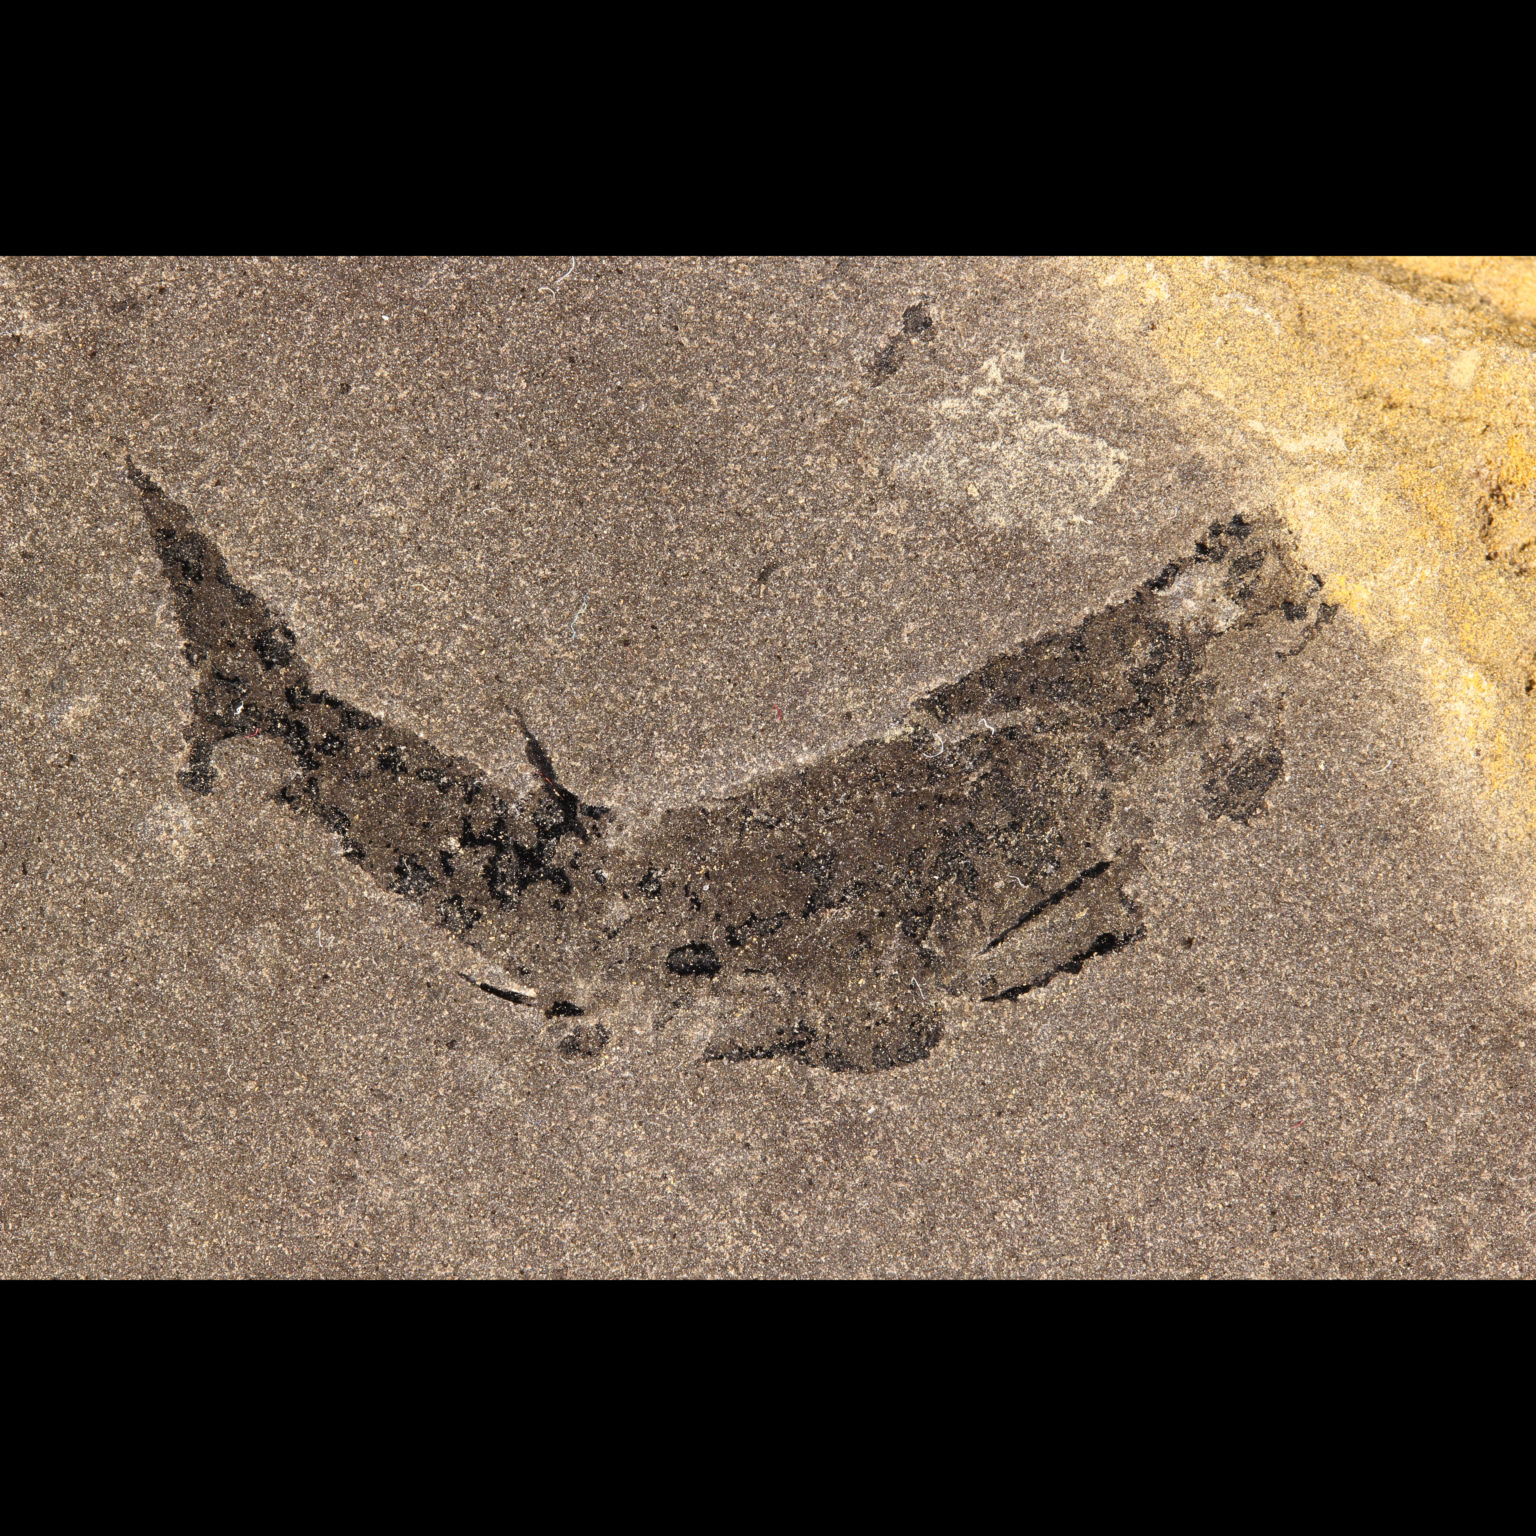 Buy fossil shark mesacanthus pusillus spiny shark